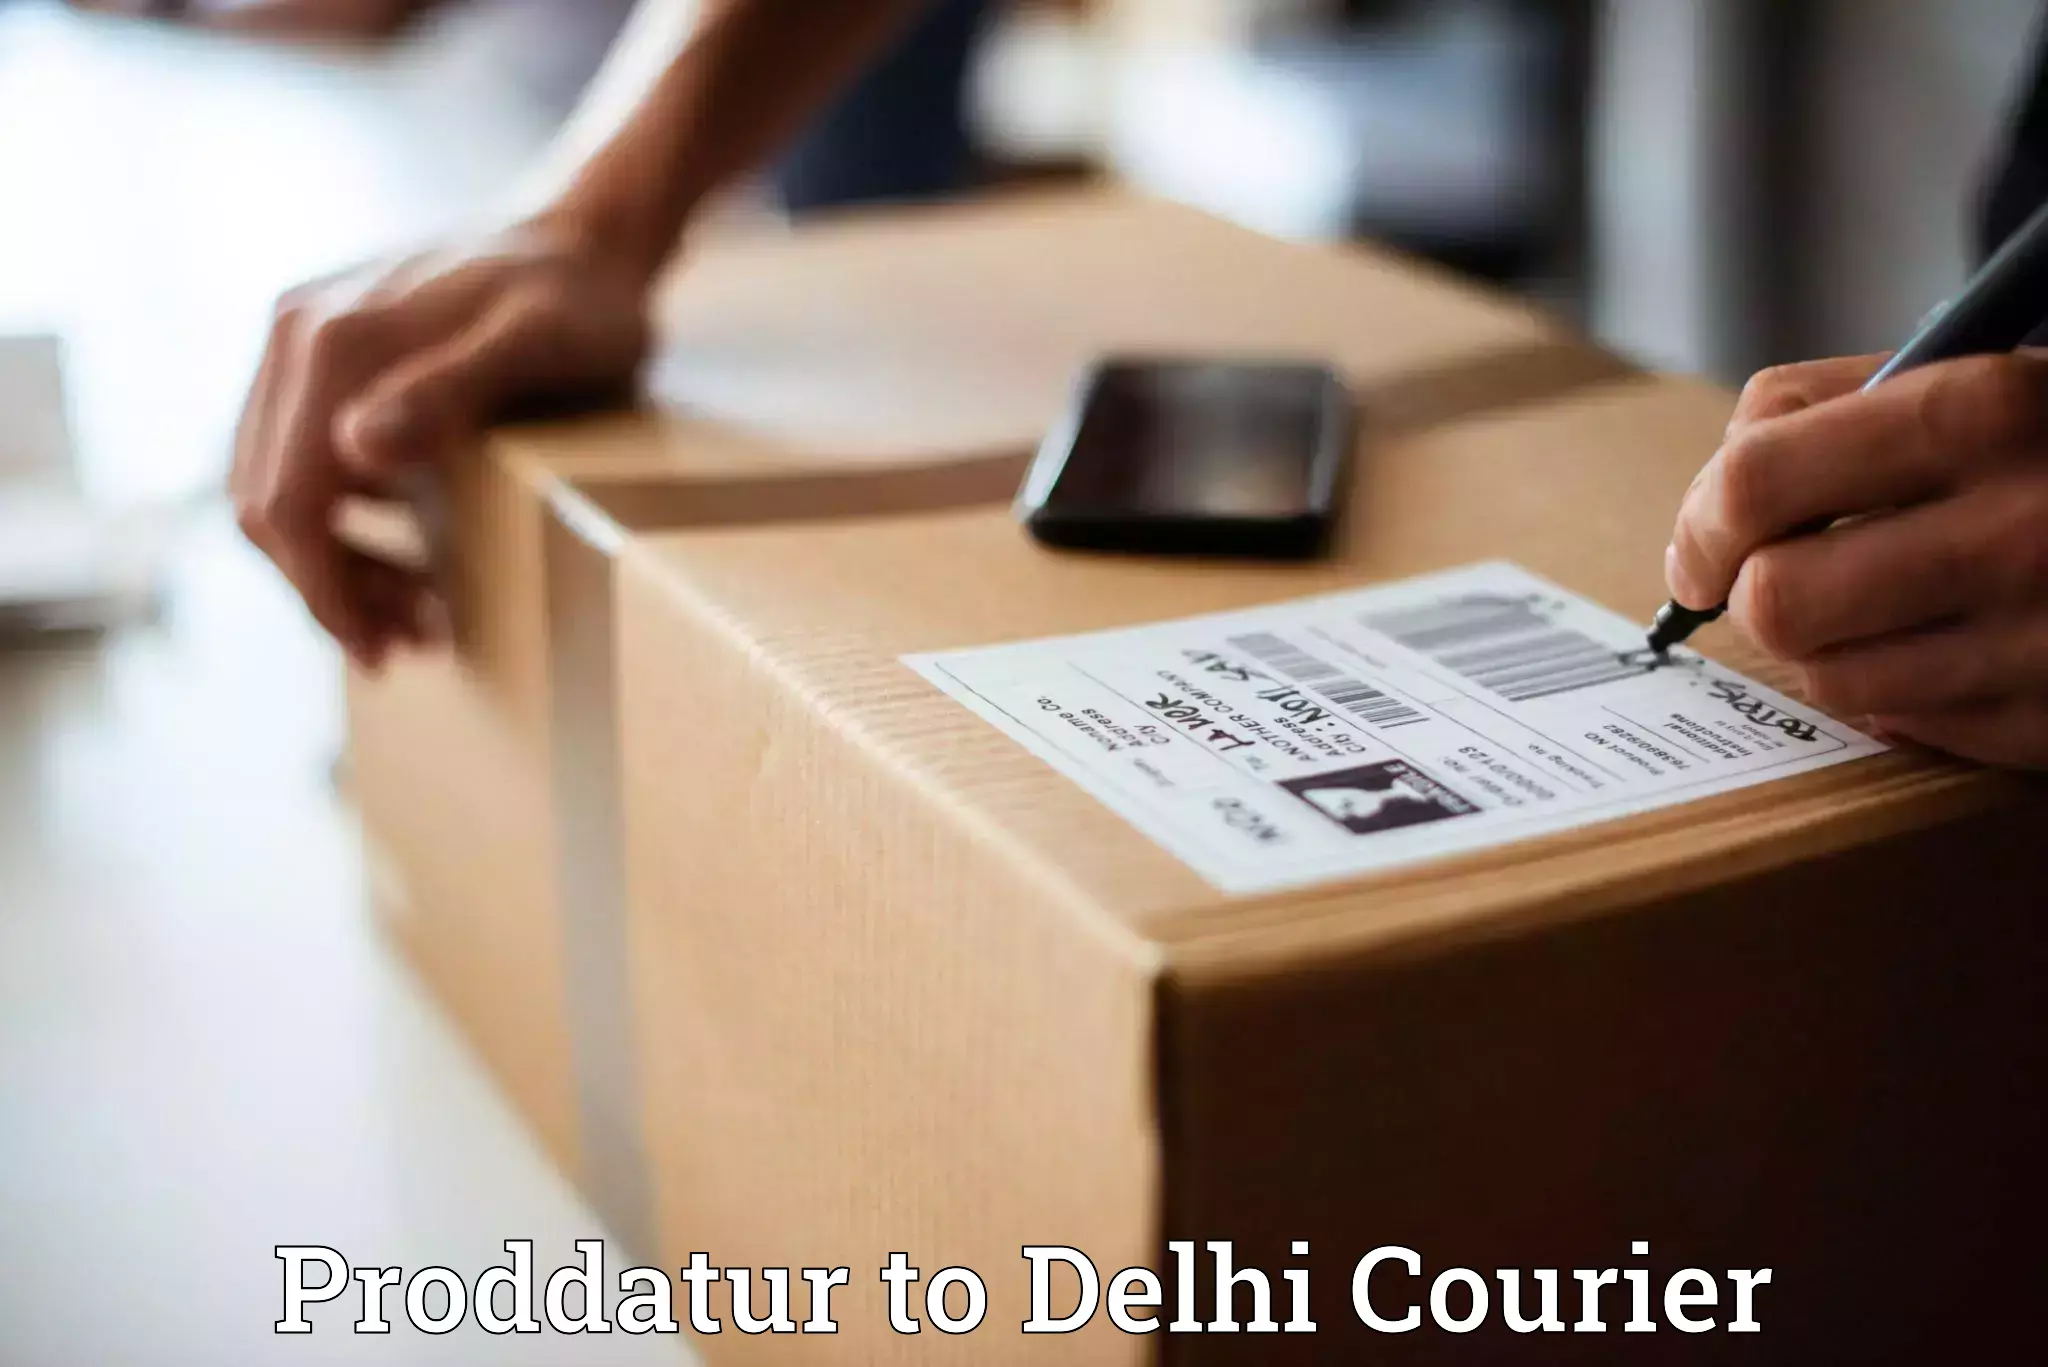 High-speed parcel service Proddatur to East Delhi